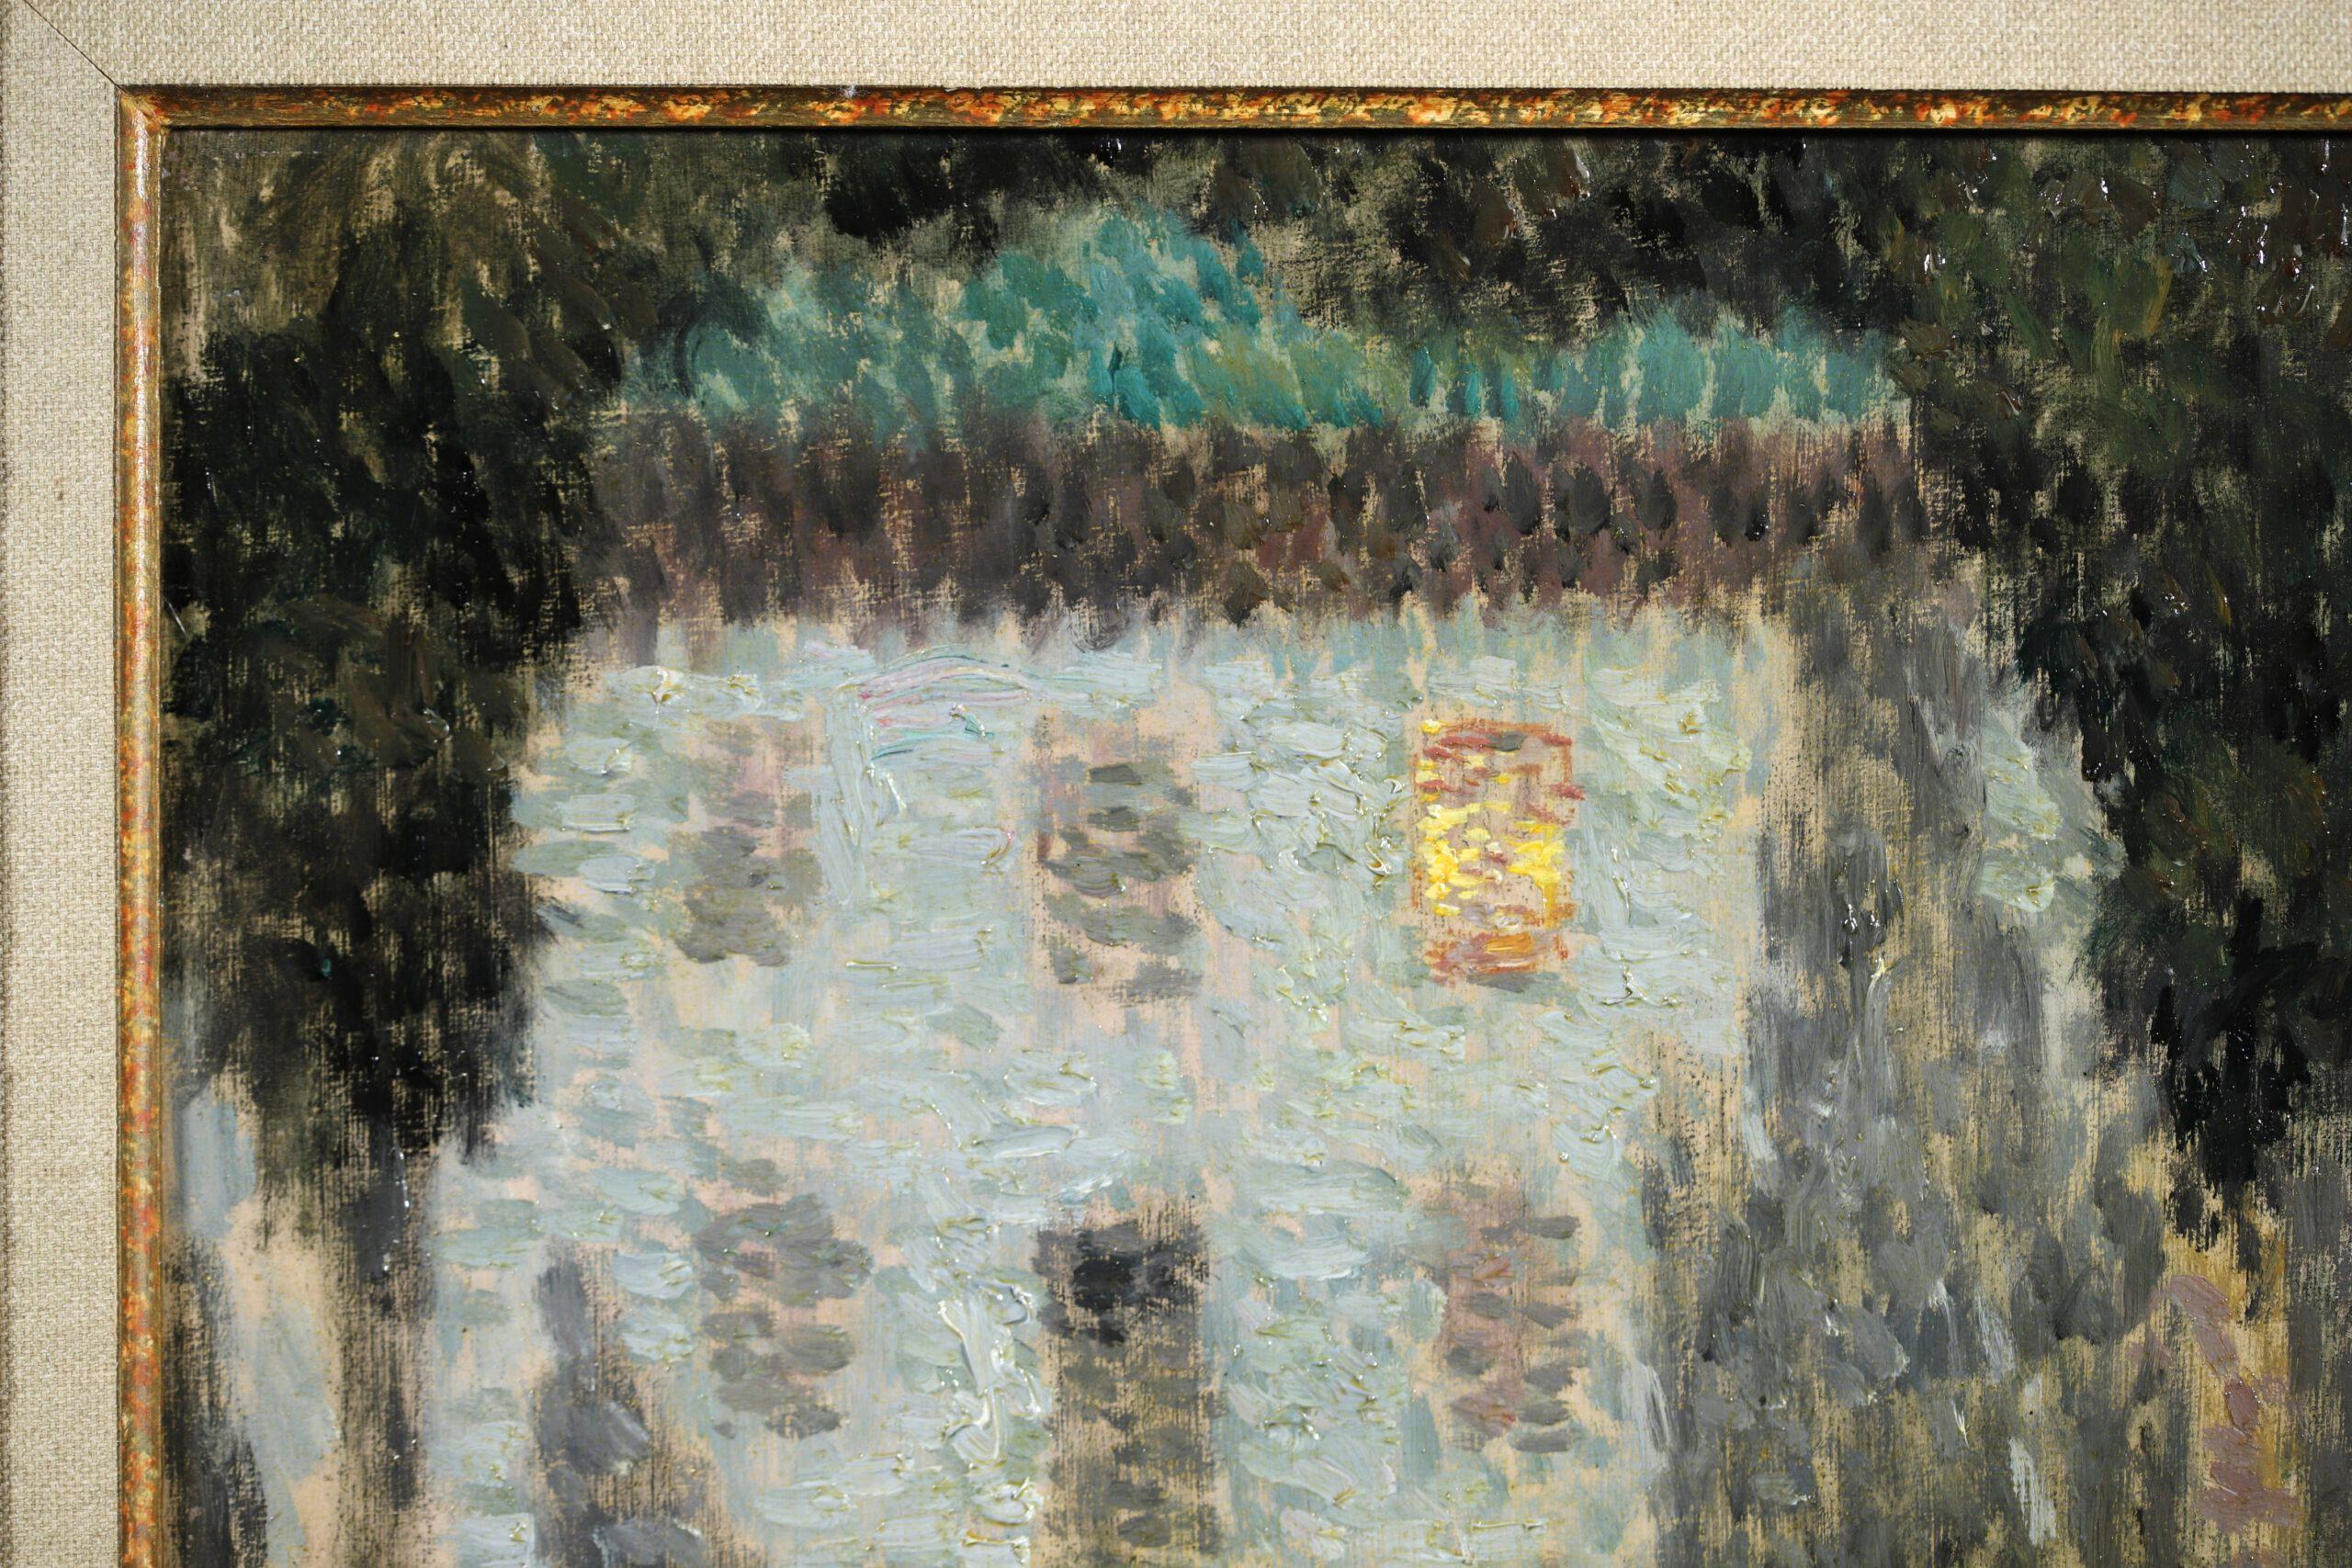 Nocturne, Fenetre Eclairee - Post Impressionist Landscape Oil - Henri Le Sidaner For Sale 1